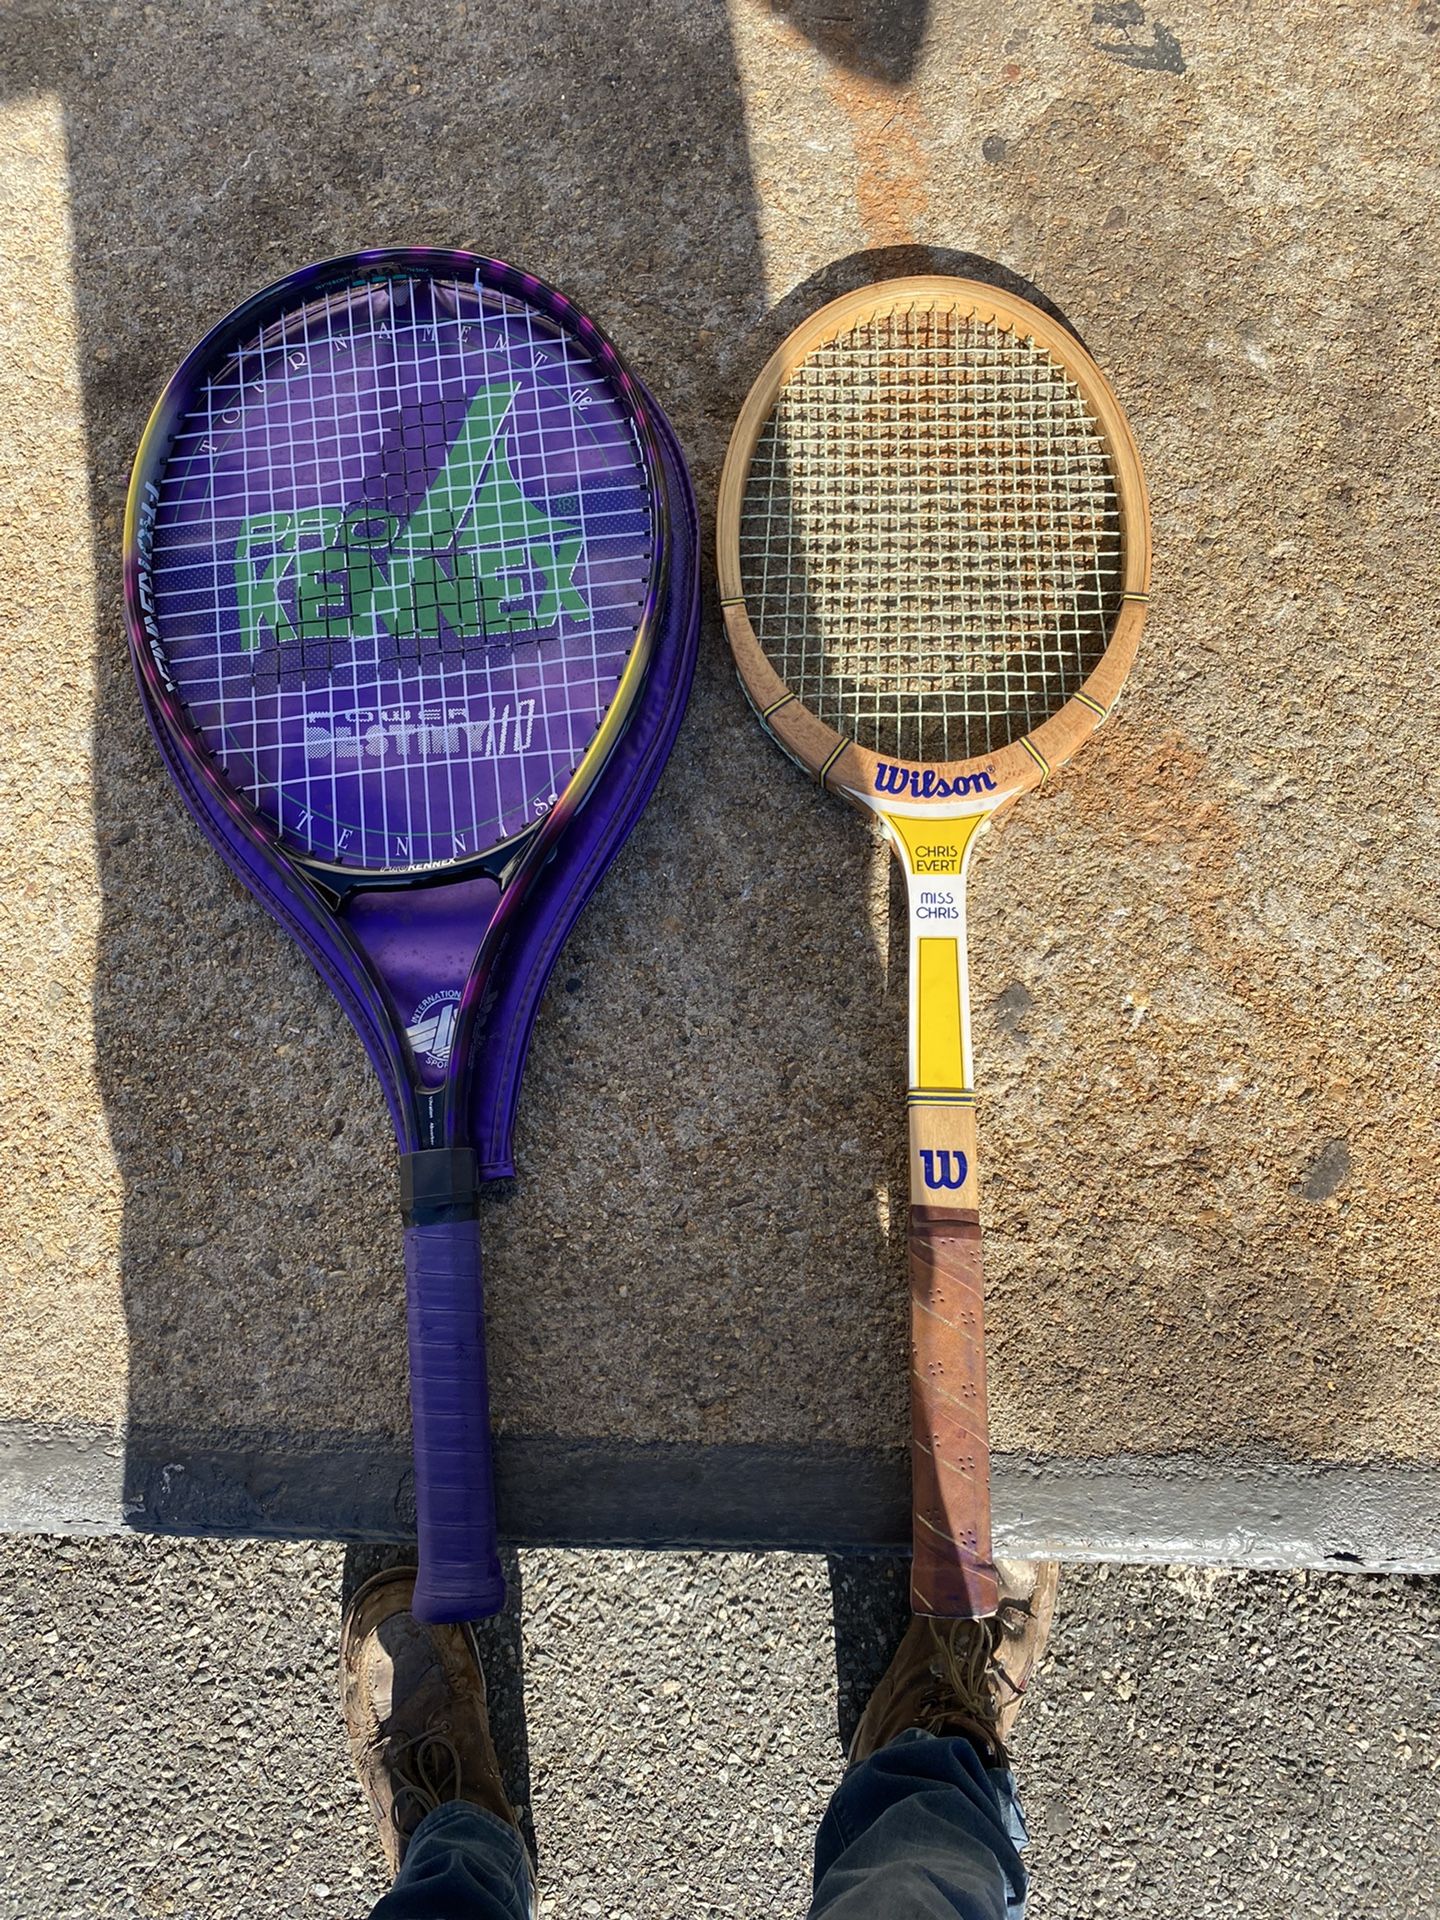 Tennis Rackets Old School And New School 